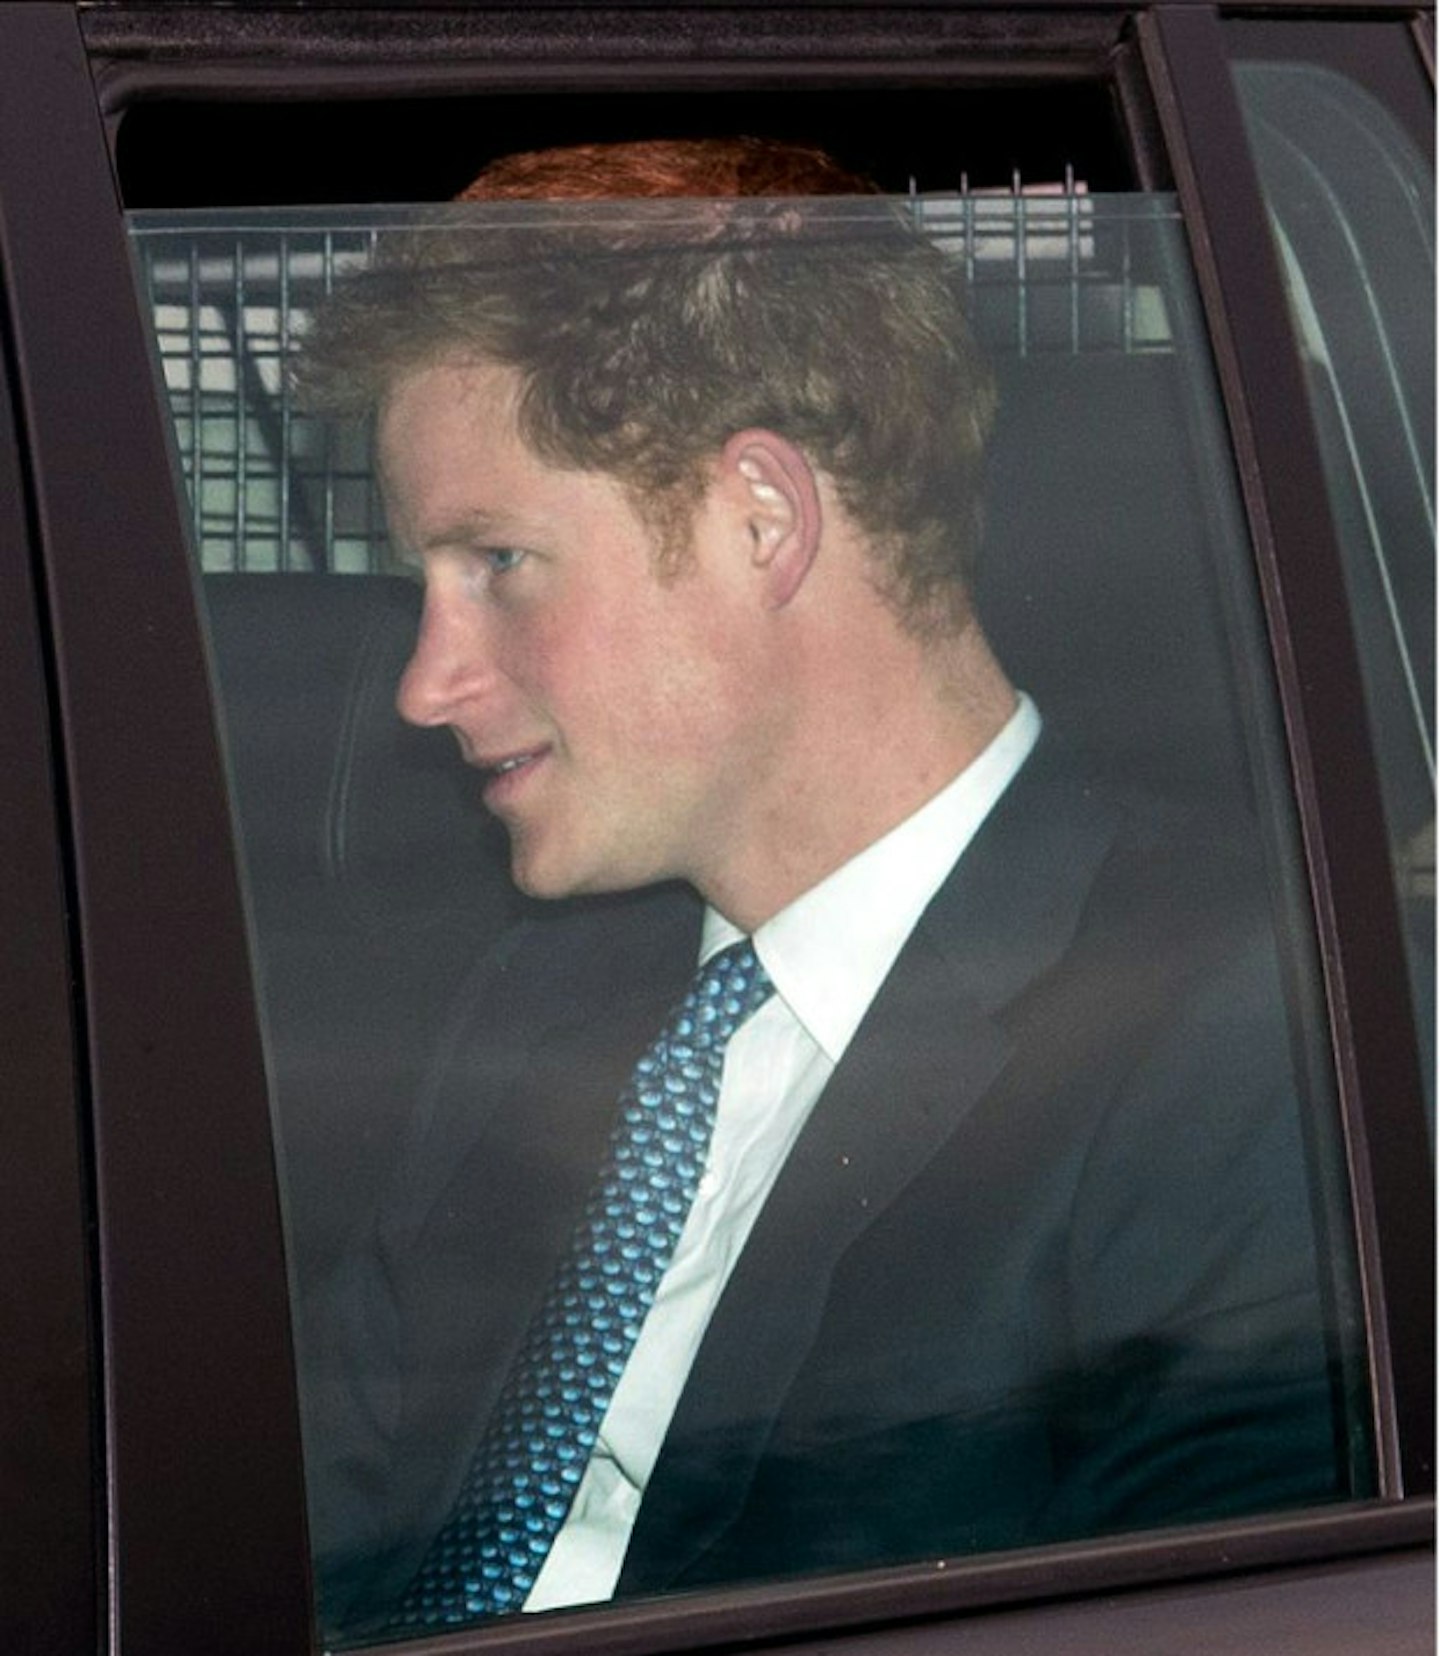 Prince Harry heads to Buckingham Palace